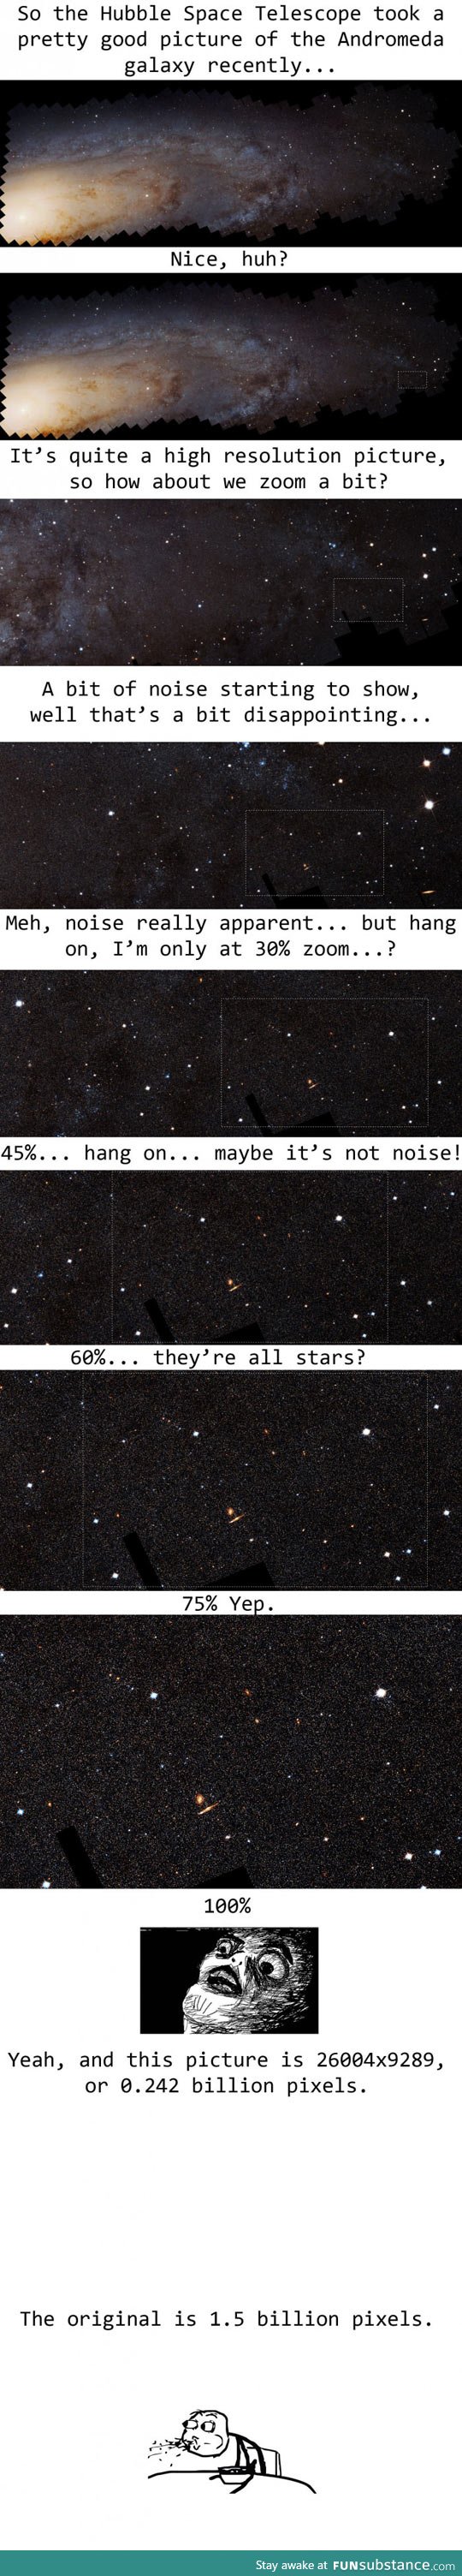 Hubble is pretty nifty